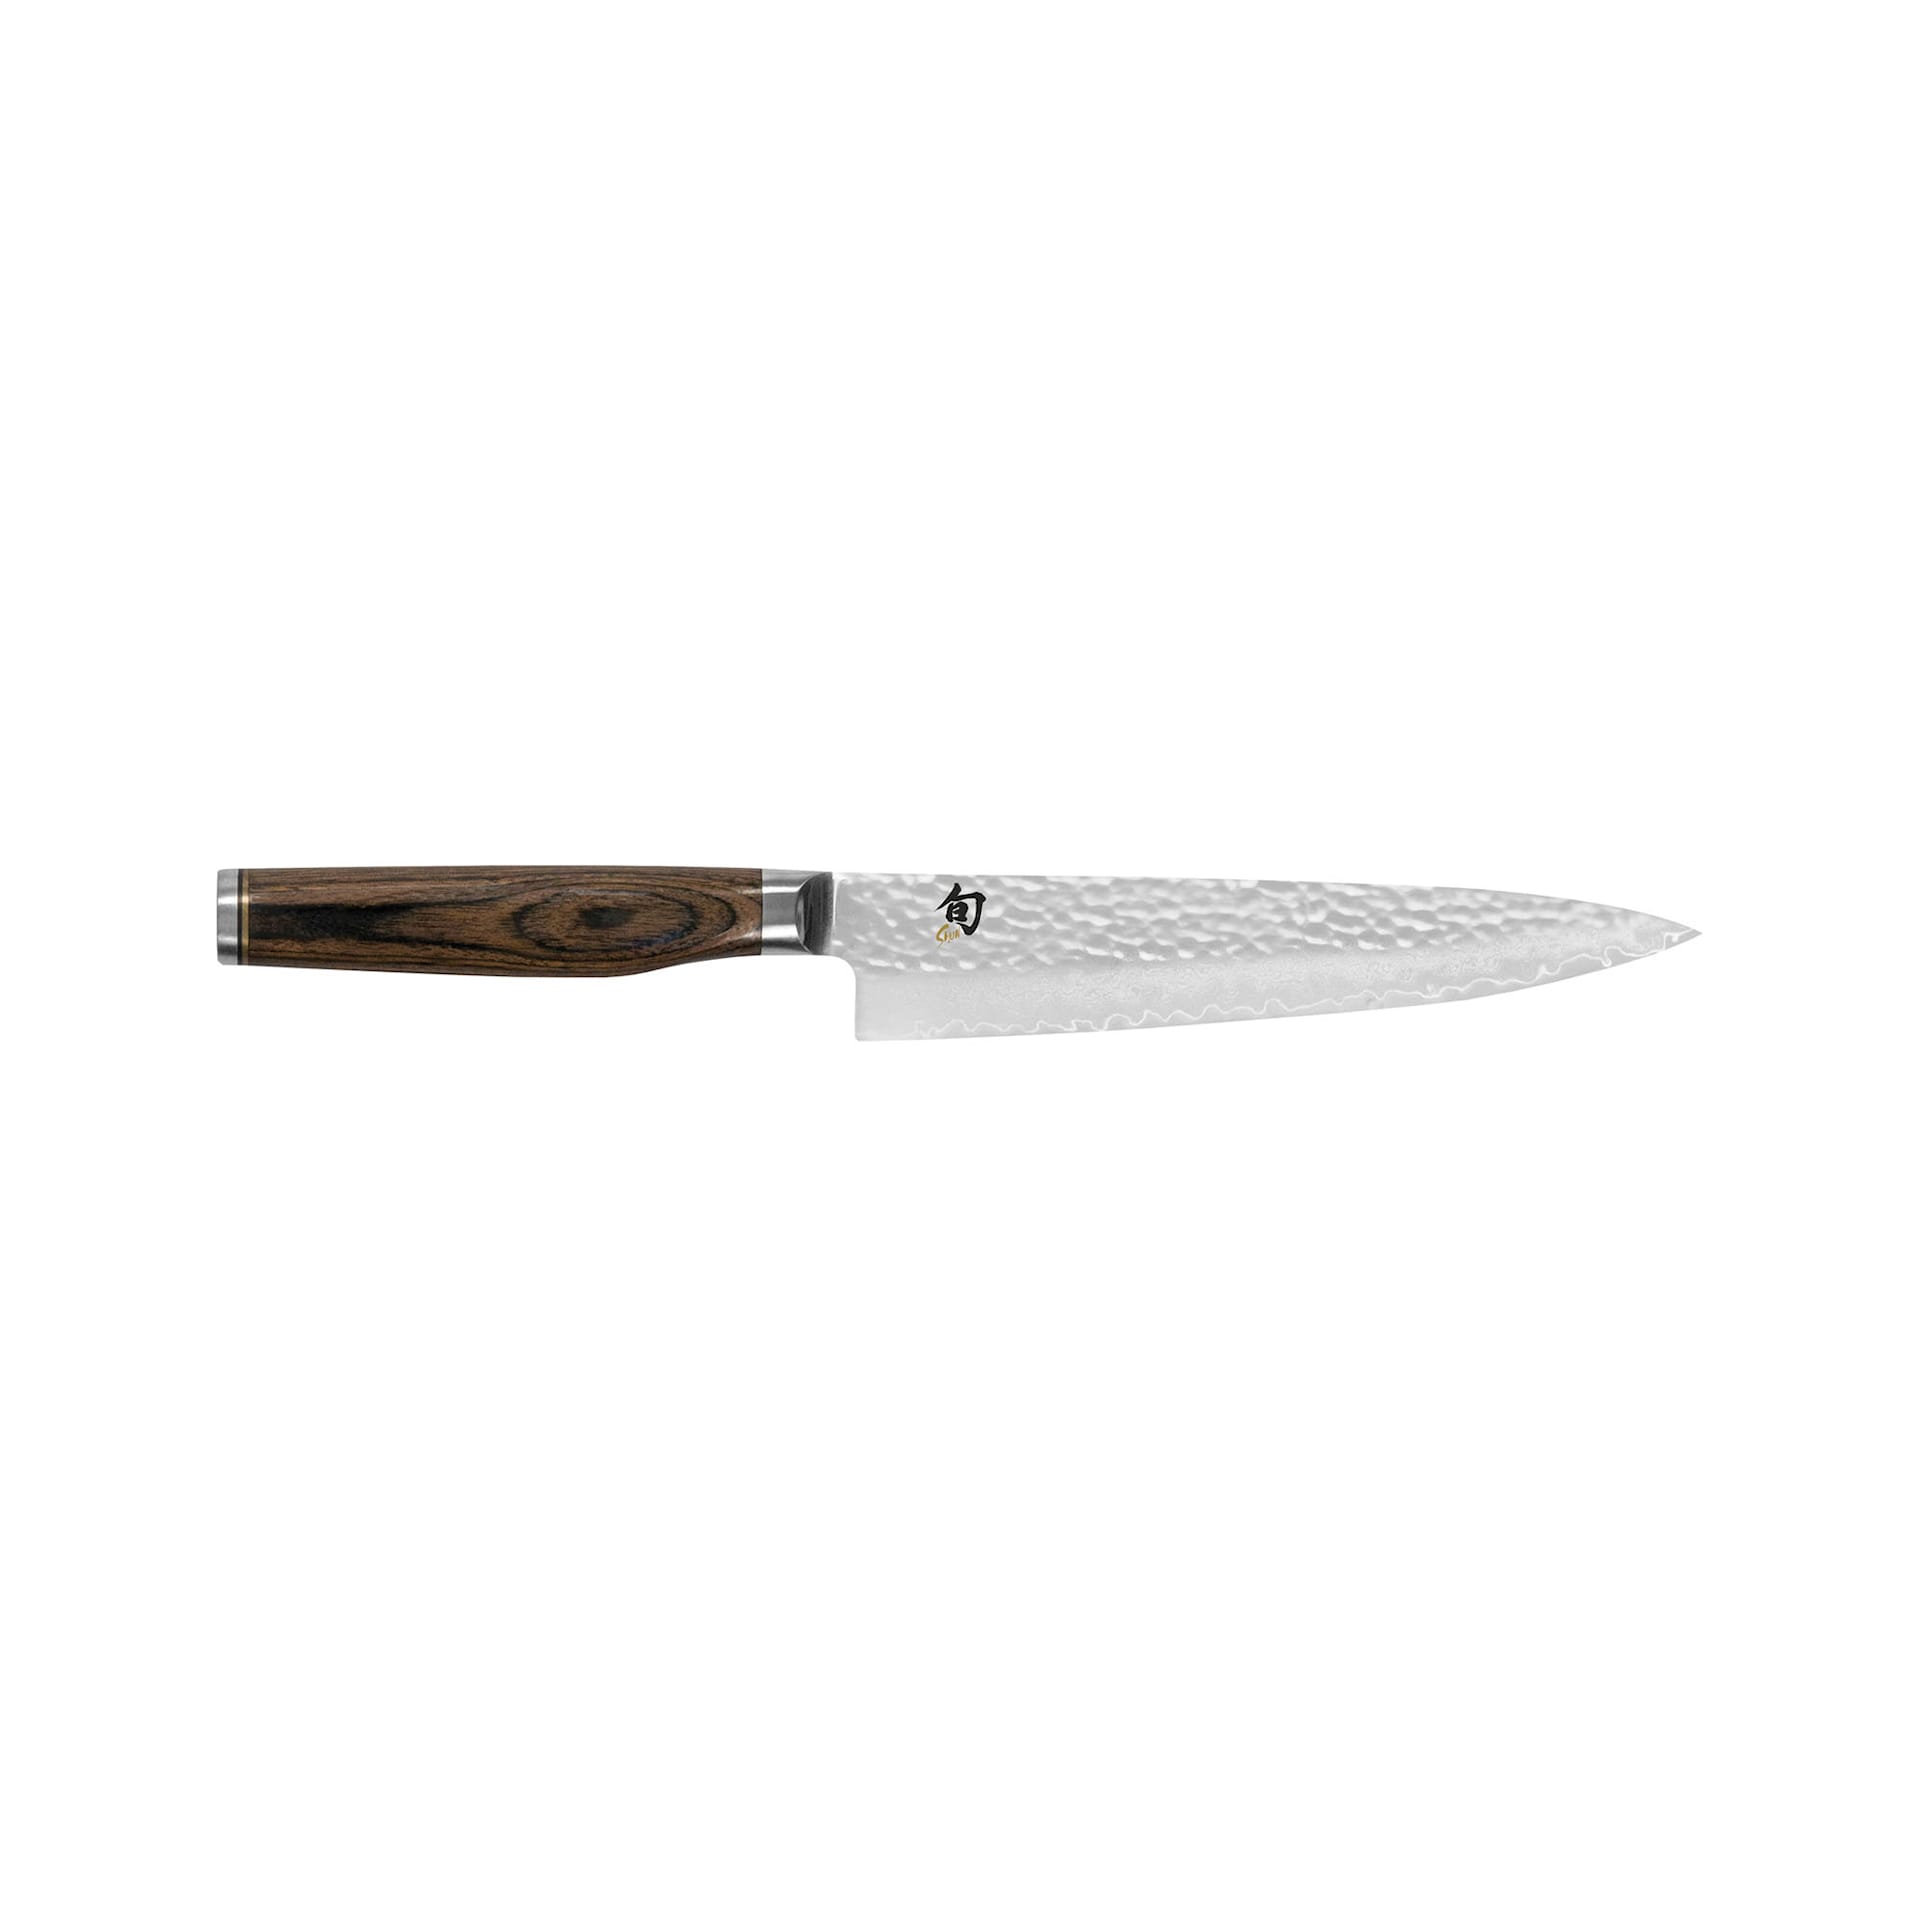 SHUN PREMIER All purpose knife 16,5 cm - KAI - NO GA